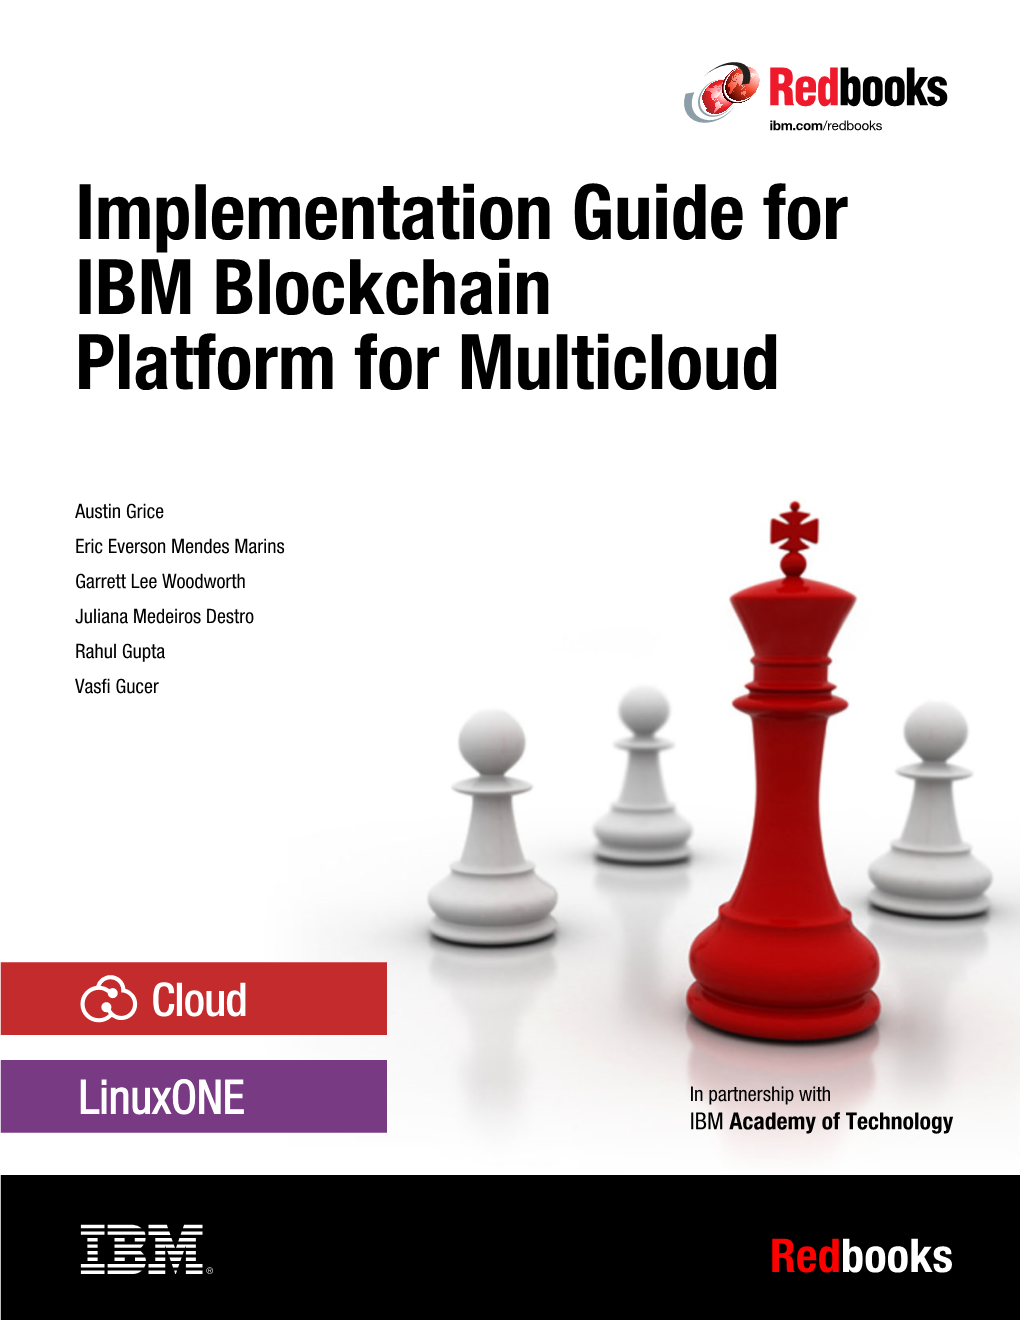 Implementation Guide for IBM Blockchain Platform for Multicloud